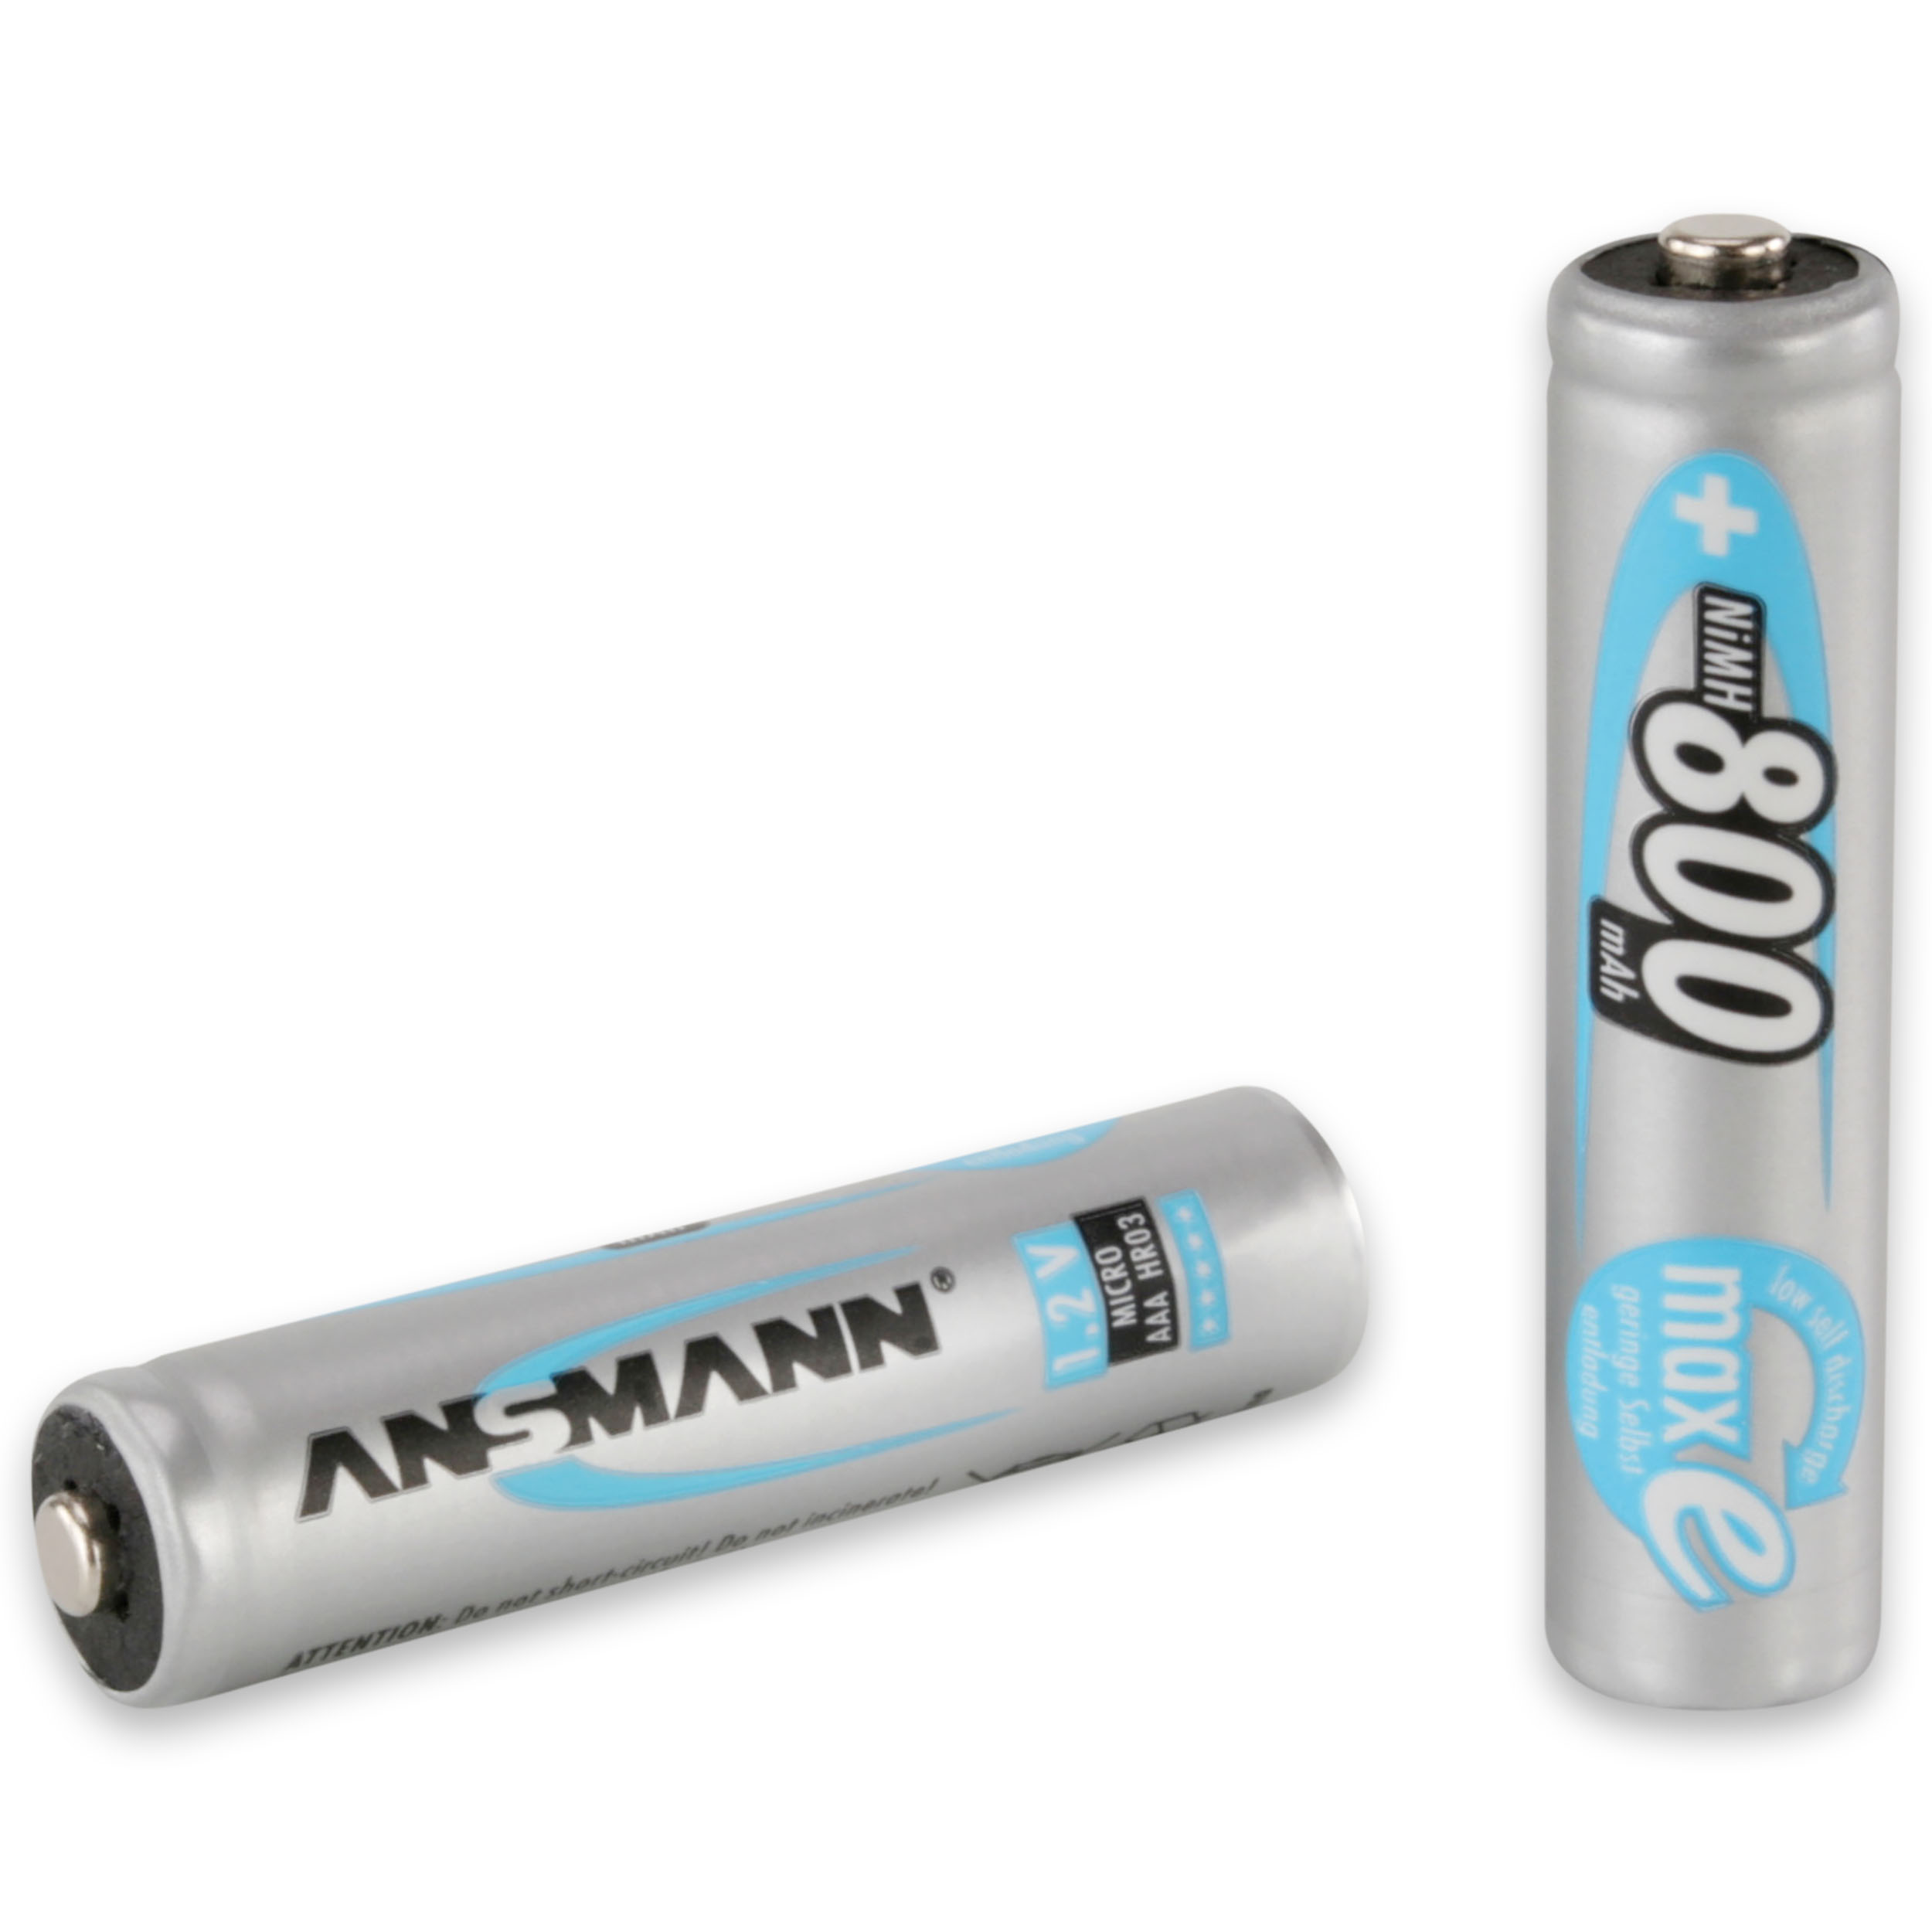 ANSMANN 5030982 Micro 800 Batterie NiMH Stück 800mAh 1.2 Volt, Akku AAA maxE (wiederaufladbar), mAh Ni-MH, 2